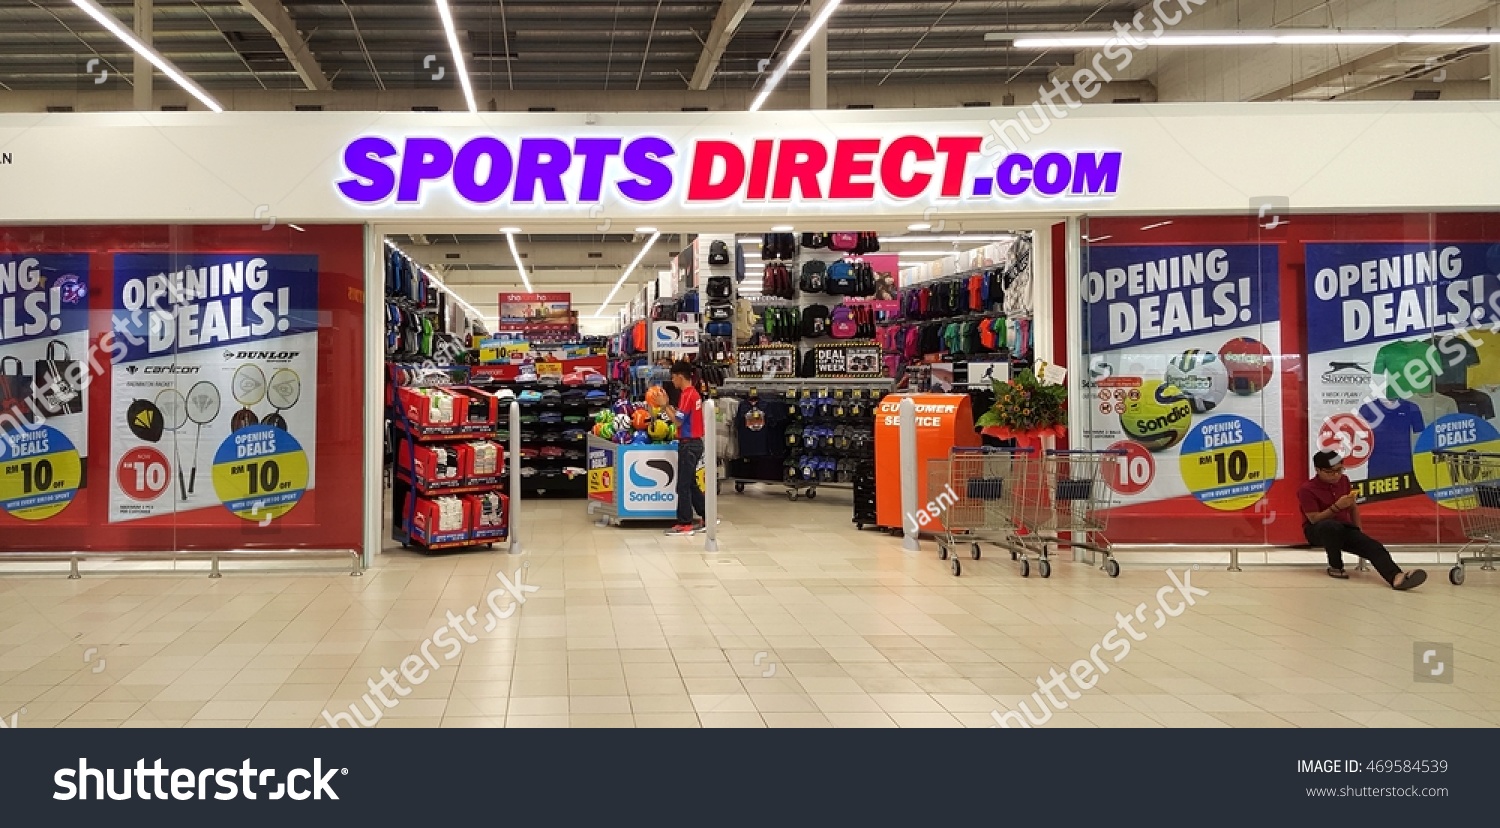 Direct kl sport Sports Direct